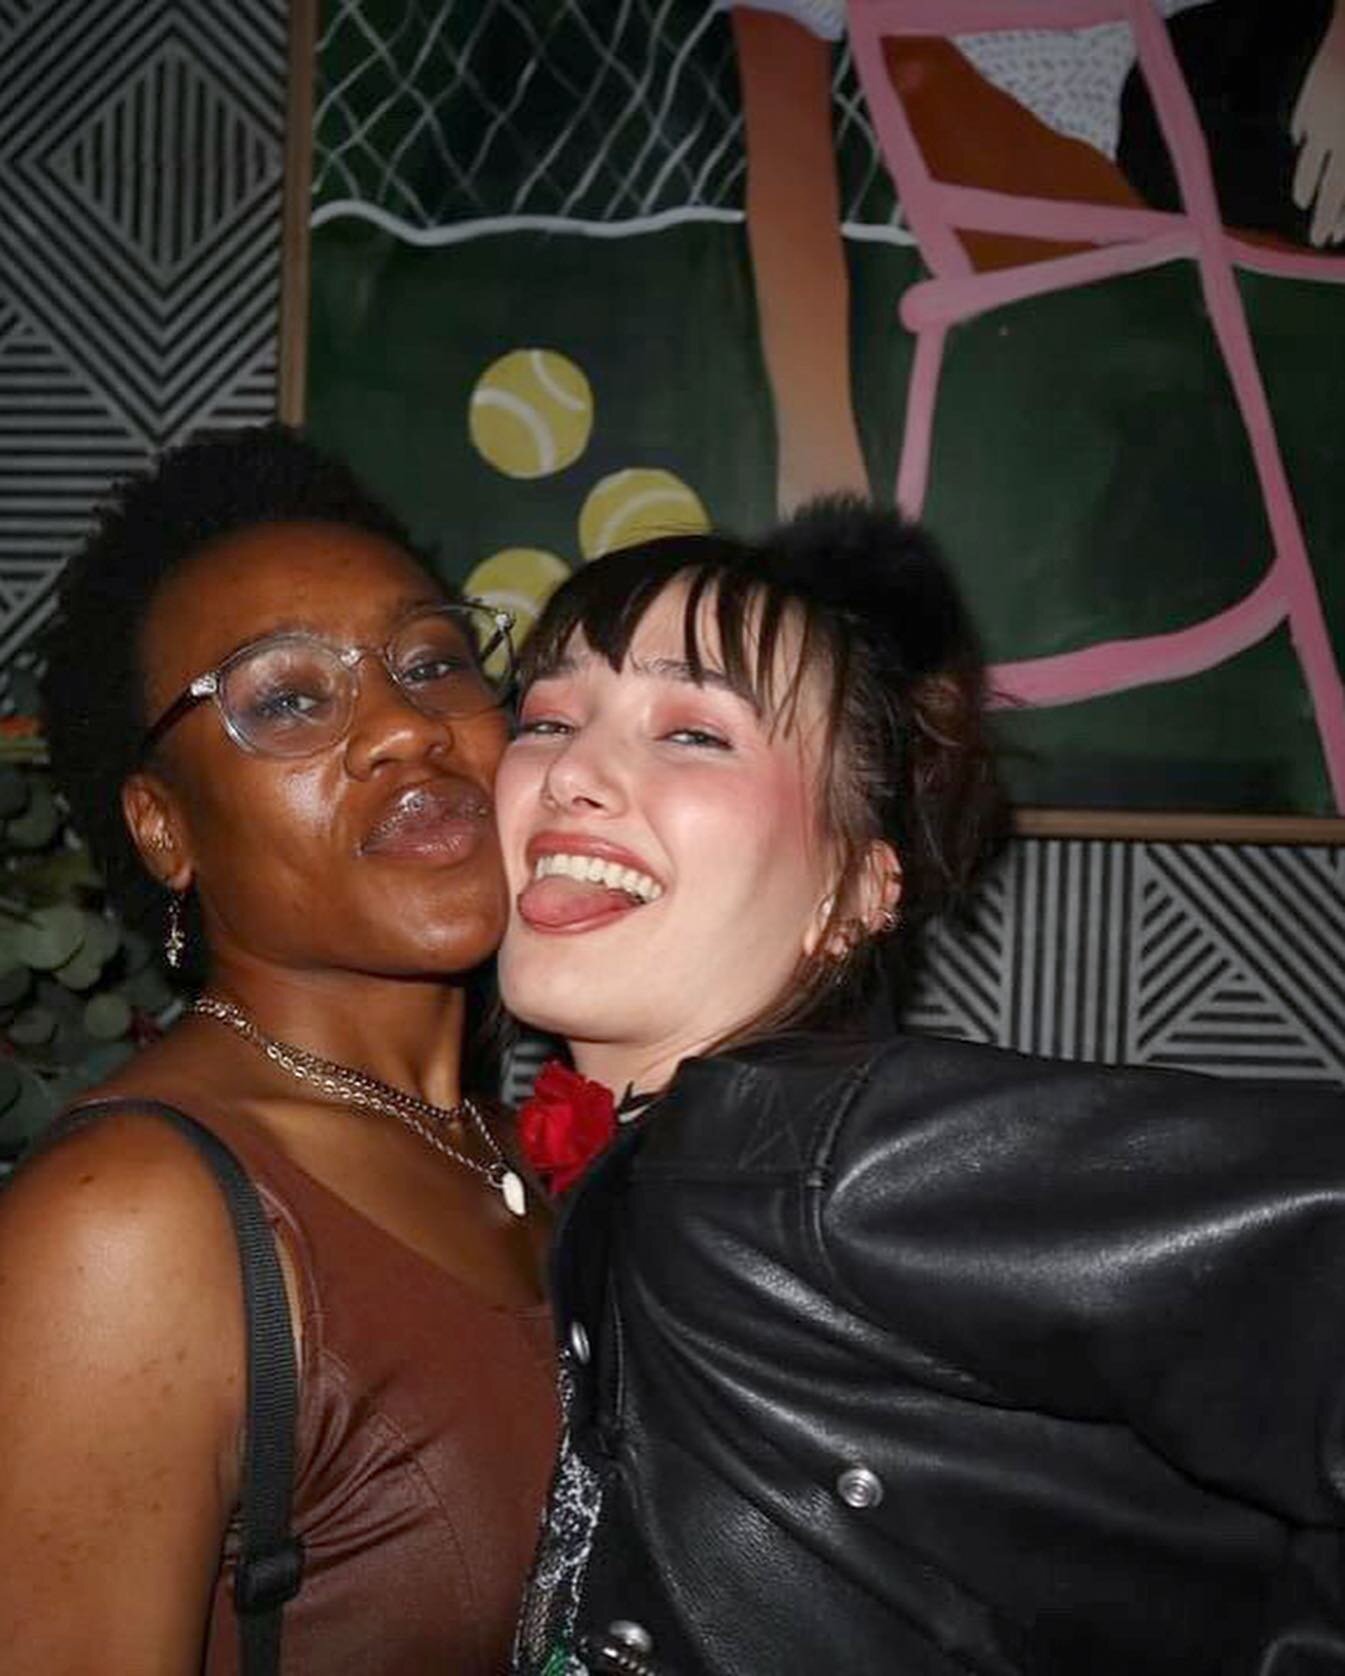 ˚₊&middot; ͟͟͞͞➳❥ Scenes from last weekend

On the decks tonight,♉️♉️♉️ @deesco444 
then after, @theaces ♬*✧˖&deg;✮♩

📸: @dahliaghafoori 

#queer #queerpride #queernightlife #lesbianbarproject  #l&euml;sbian #lesbianas #lesbianpride #lesbian🏳️&zwj;